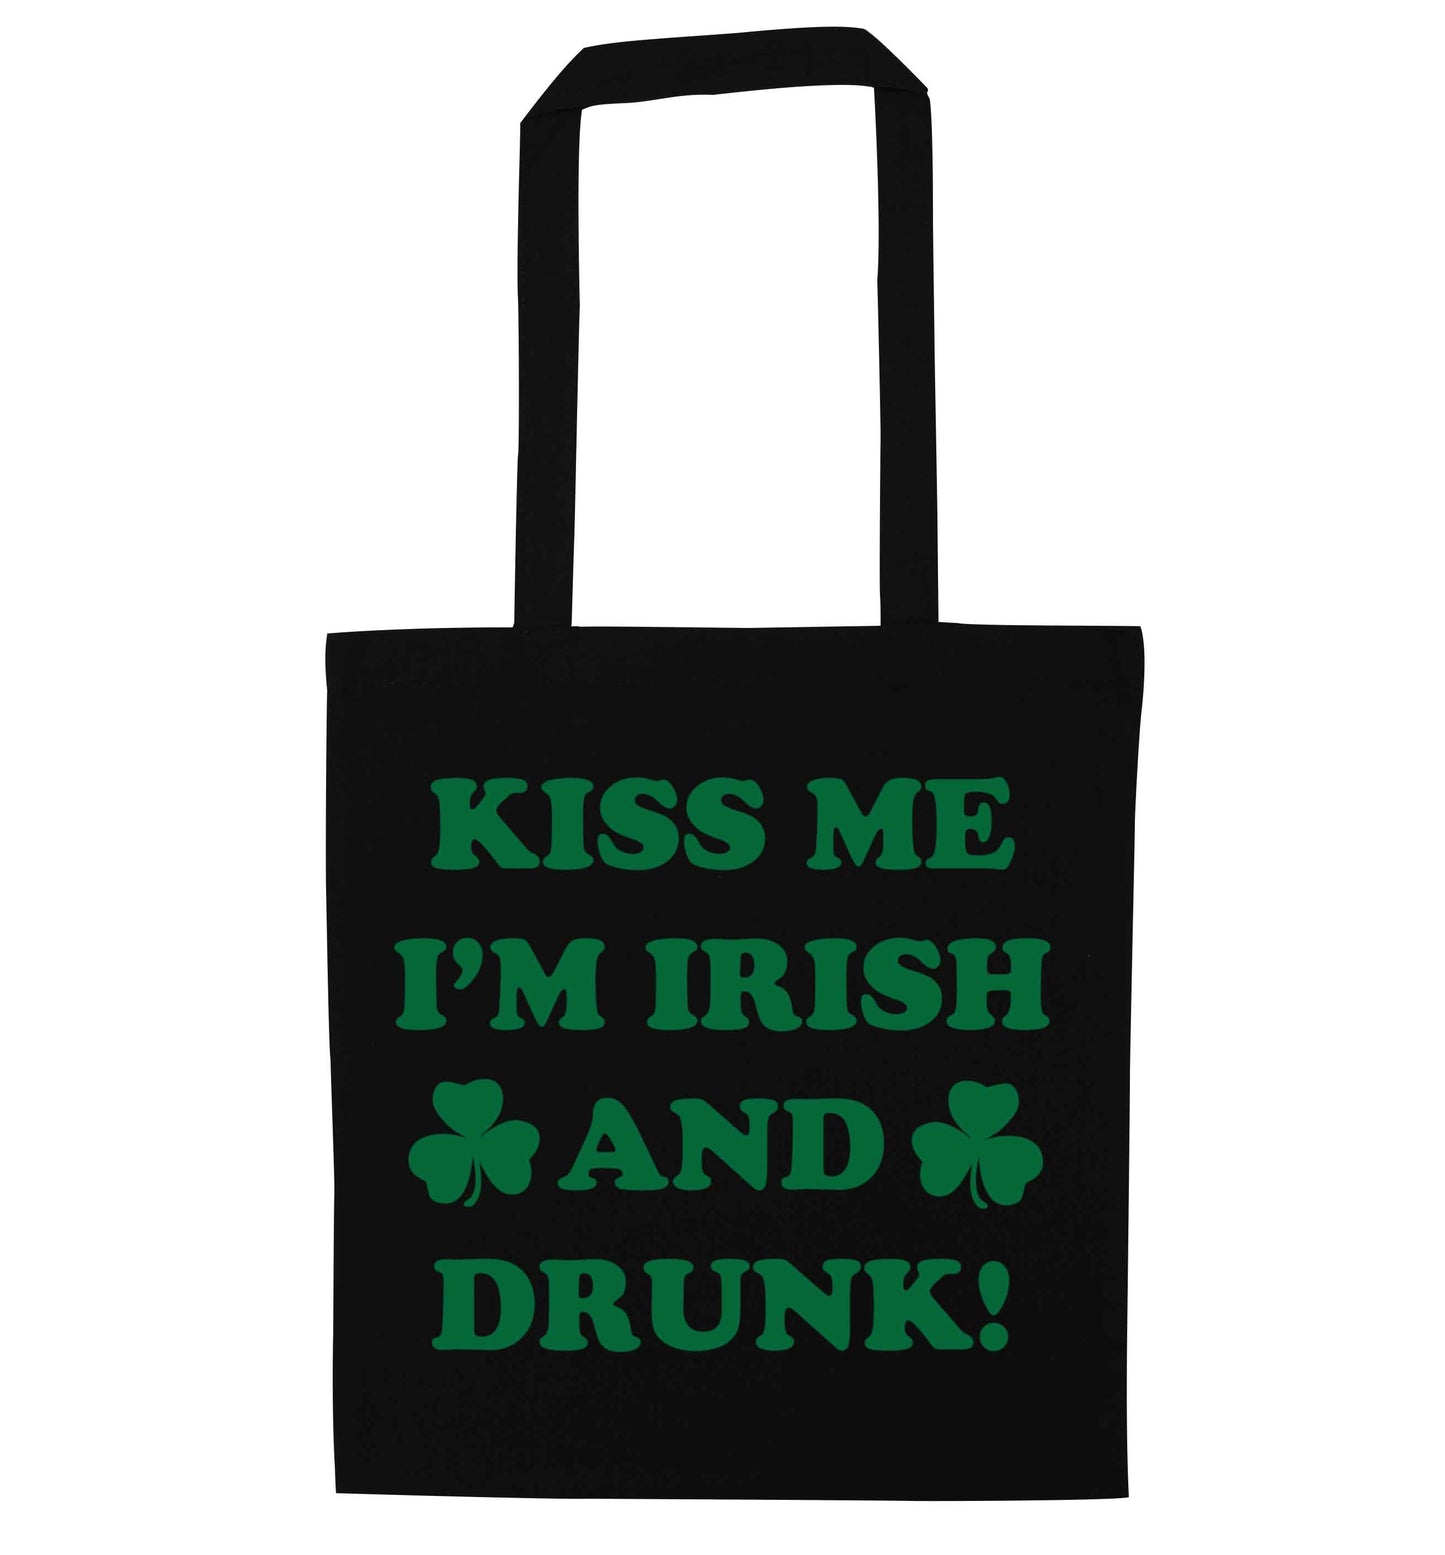 Kiss me I'm Irish and drunk black tote bag